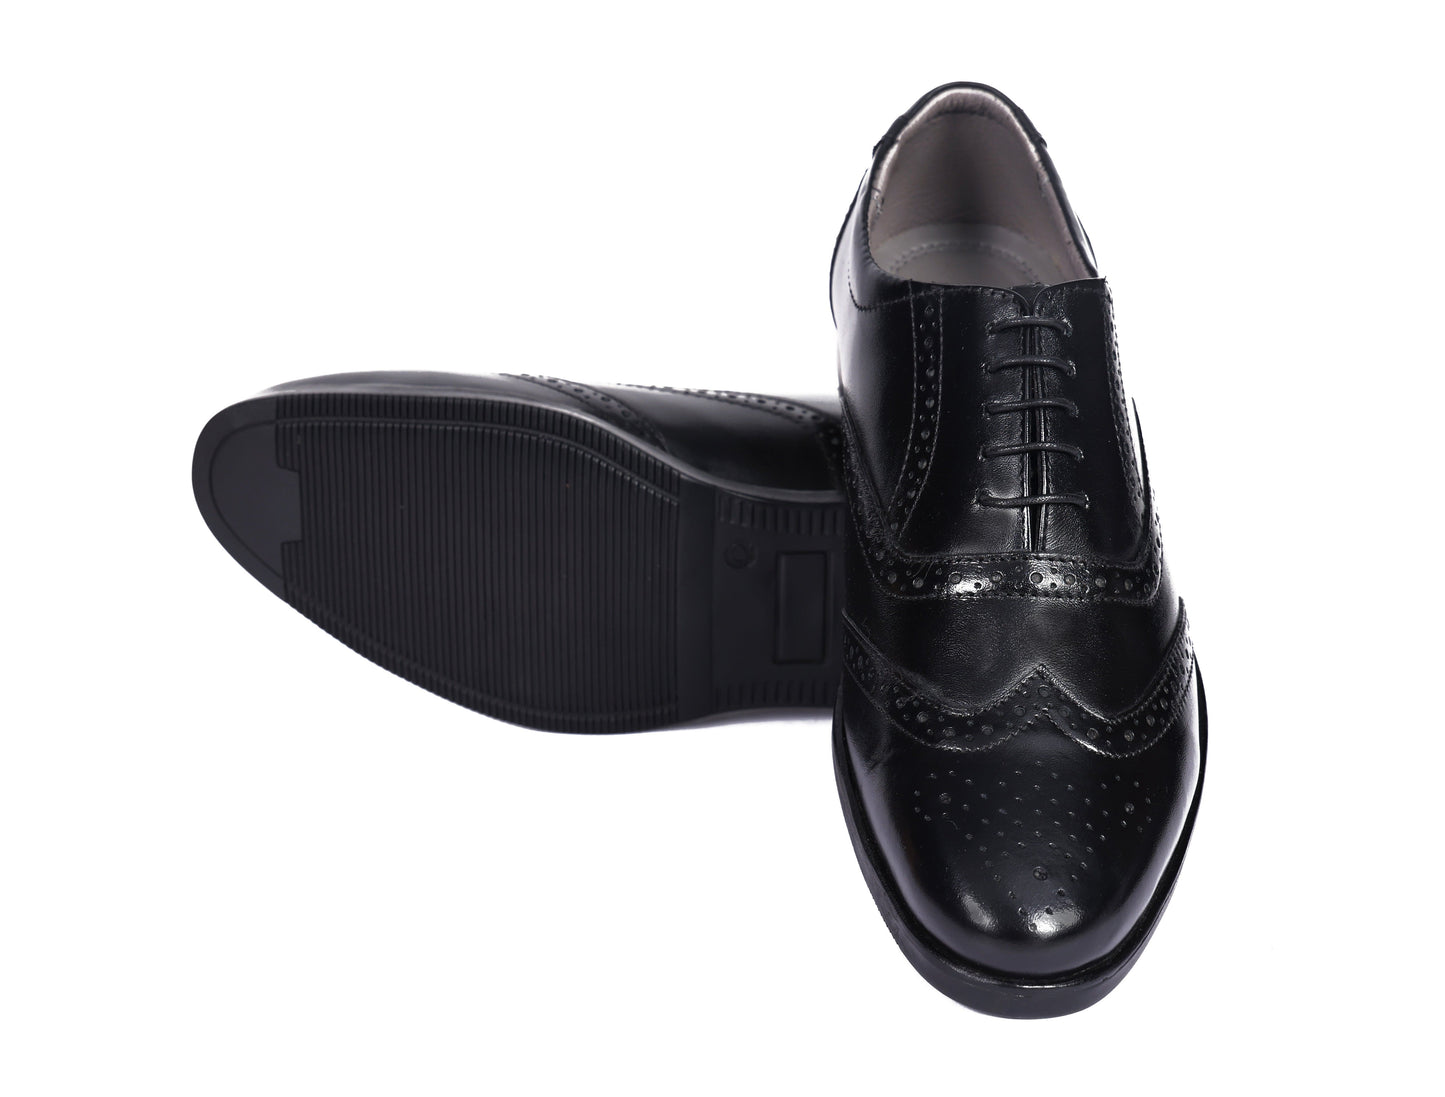 "Refined Elegance: Premium Black Formal Shoes" Art: LS-1105